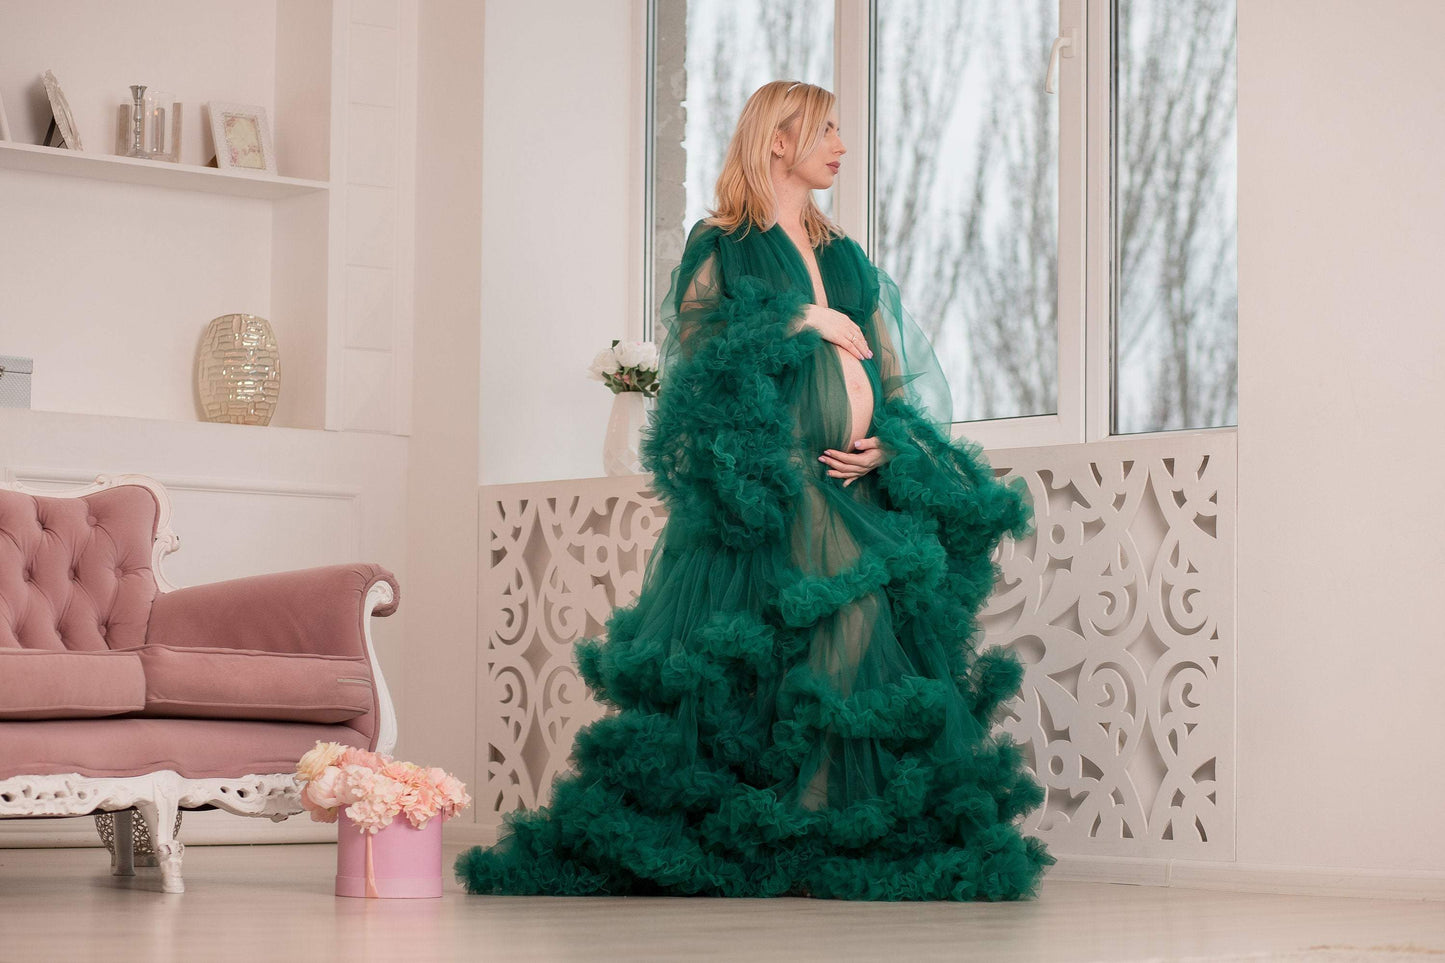 Emerald Green Ruffled Maternity Robe VMR25